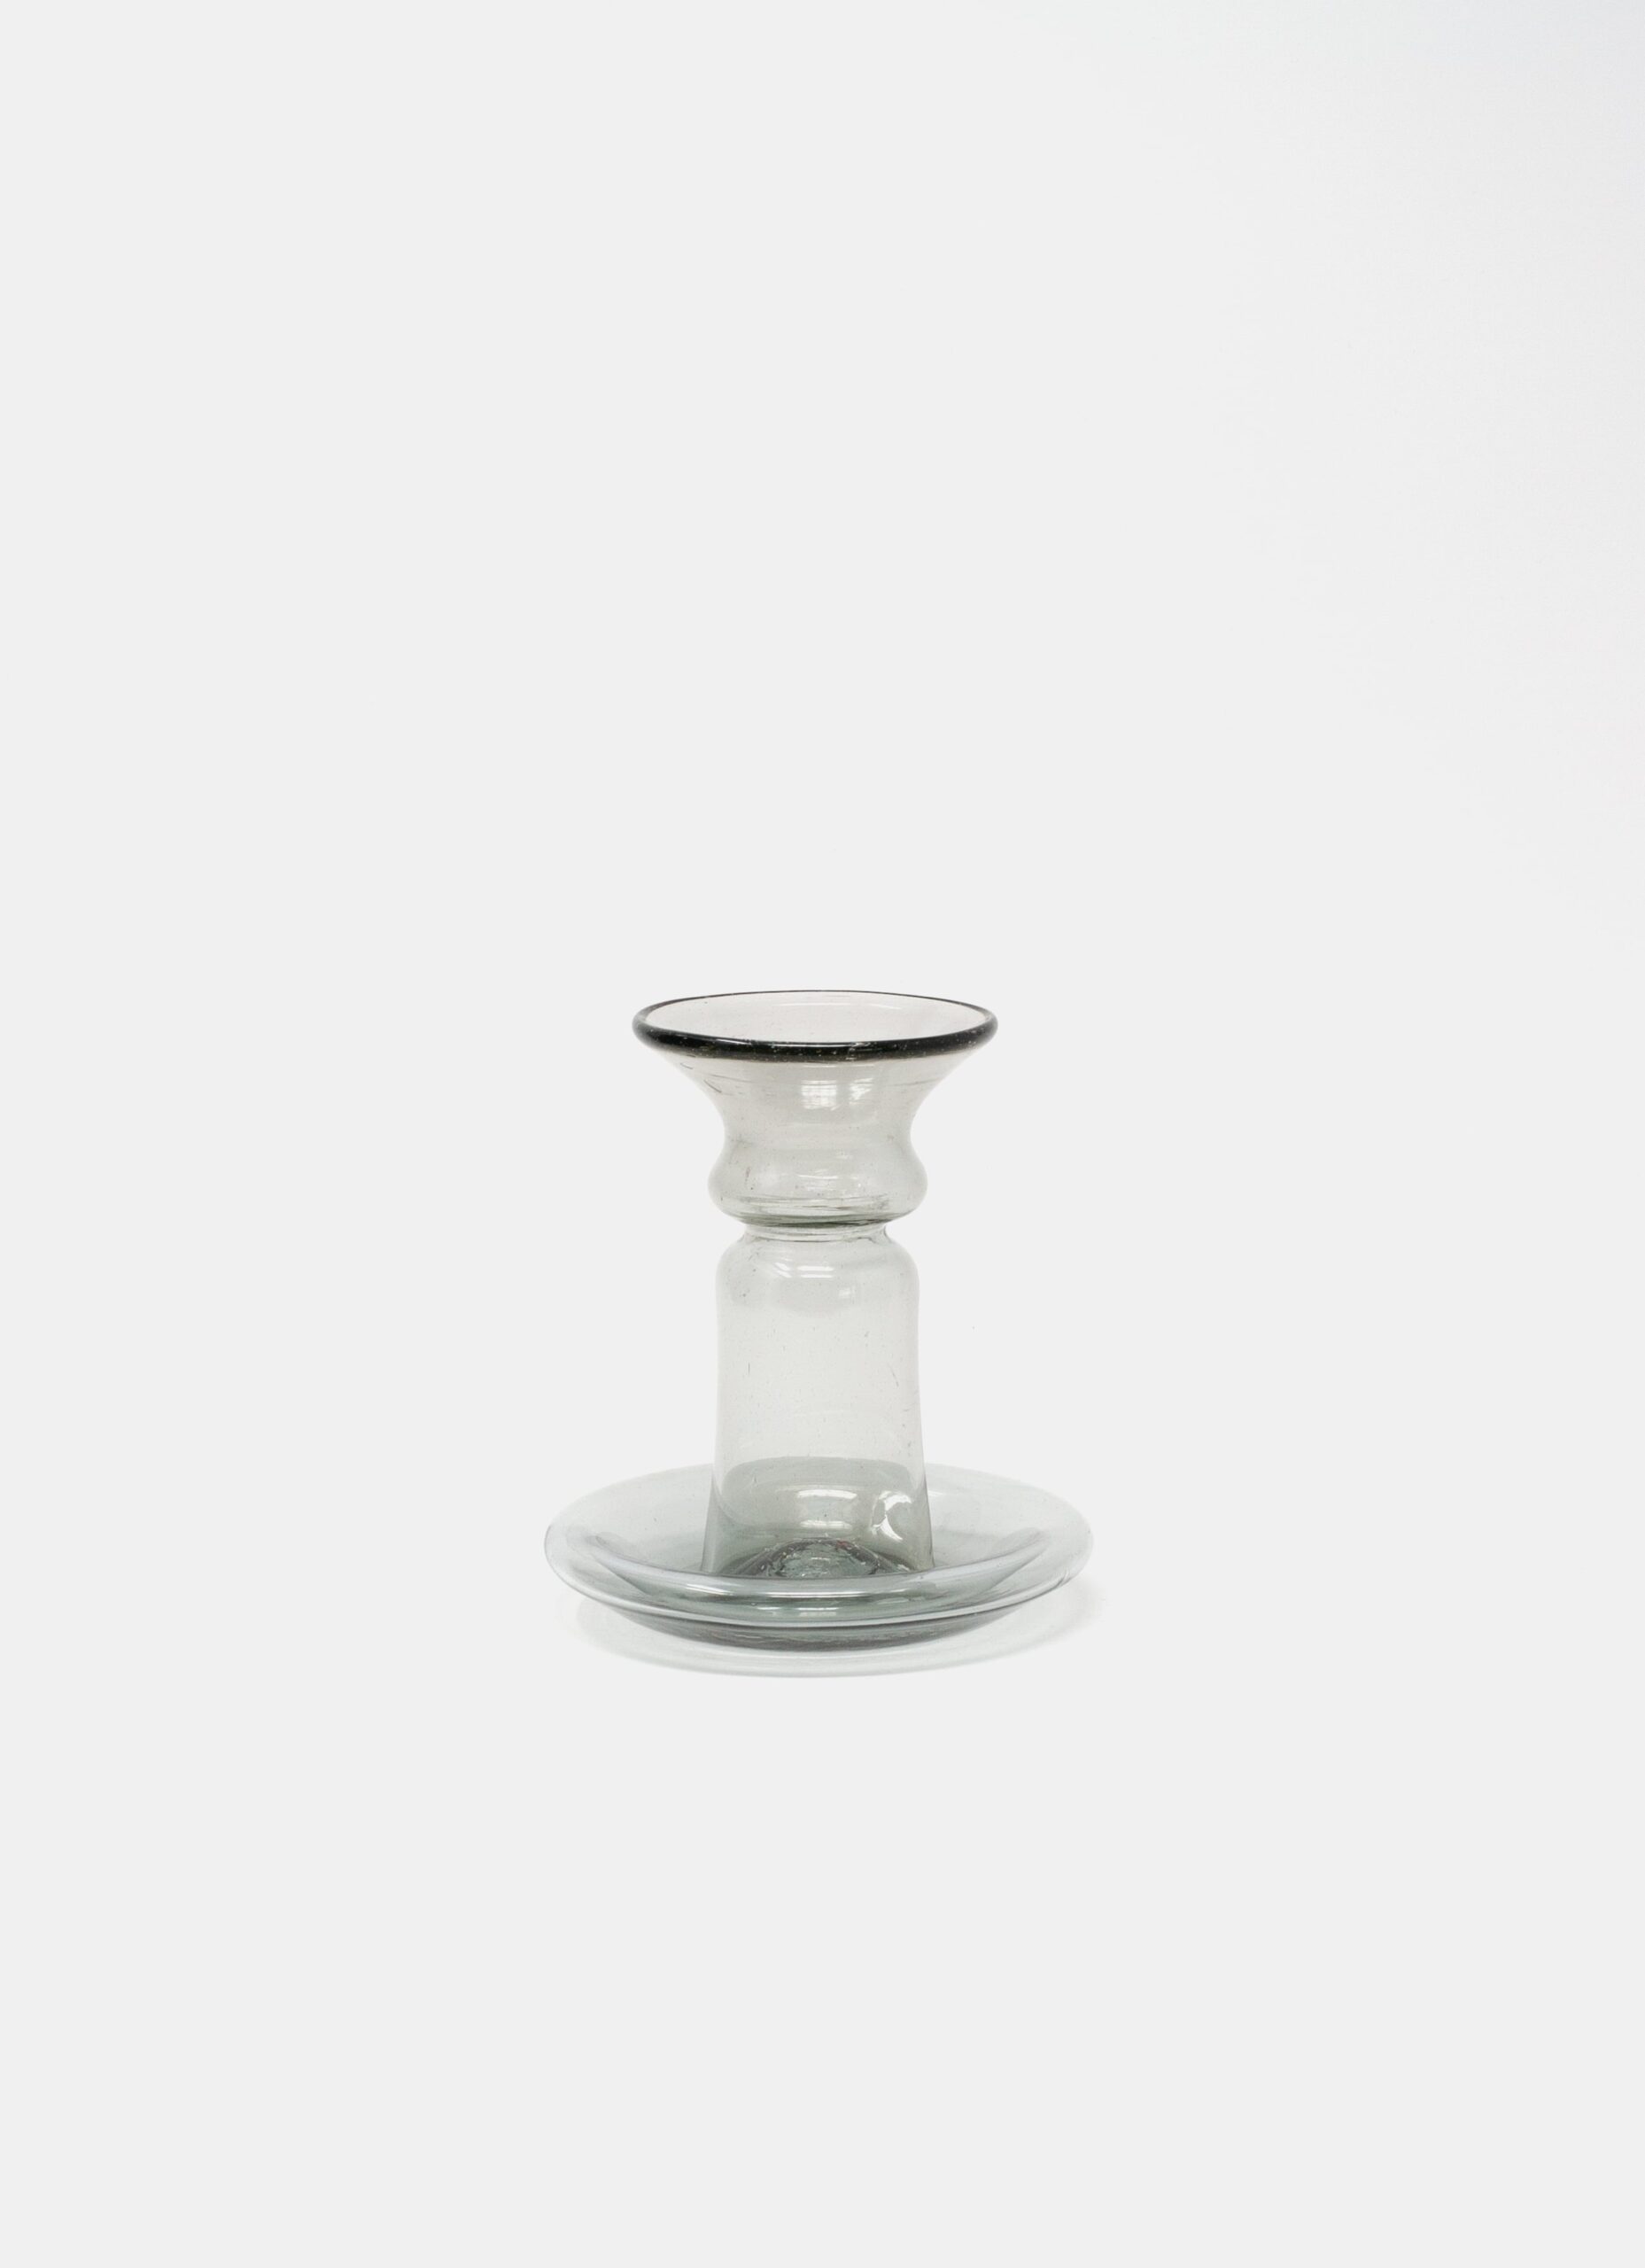 La Soufflerie - Hand-blown recycled glass - Porta Candele Piccolo - Smoky